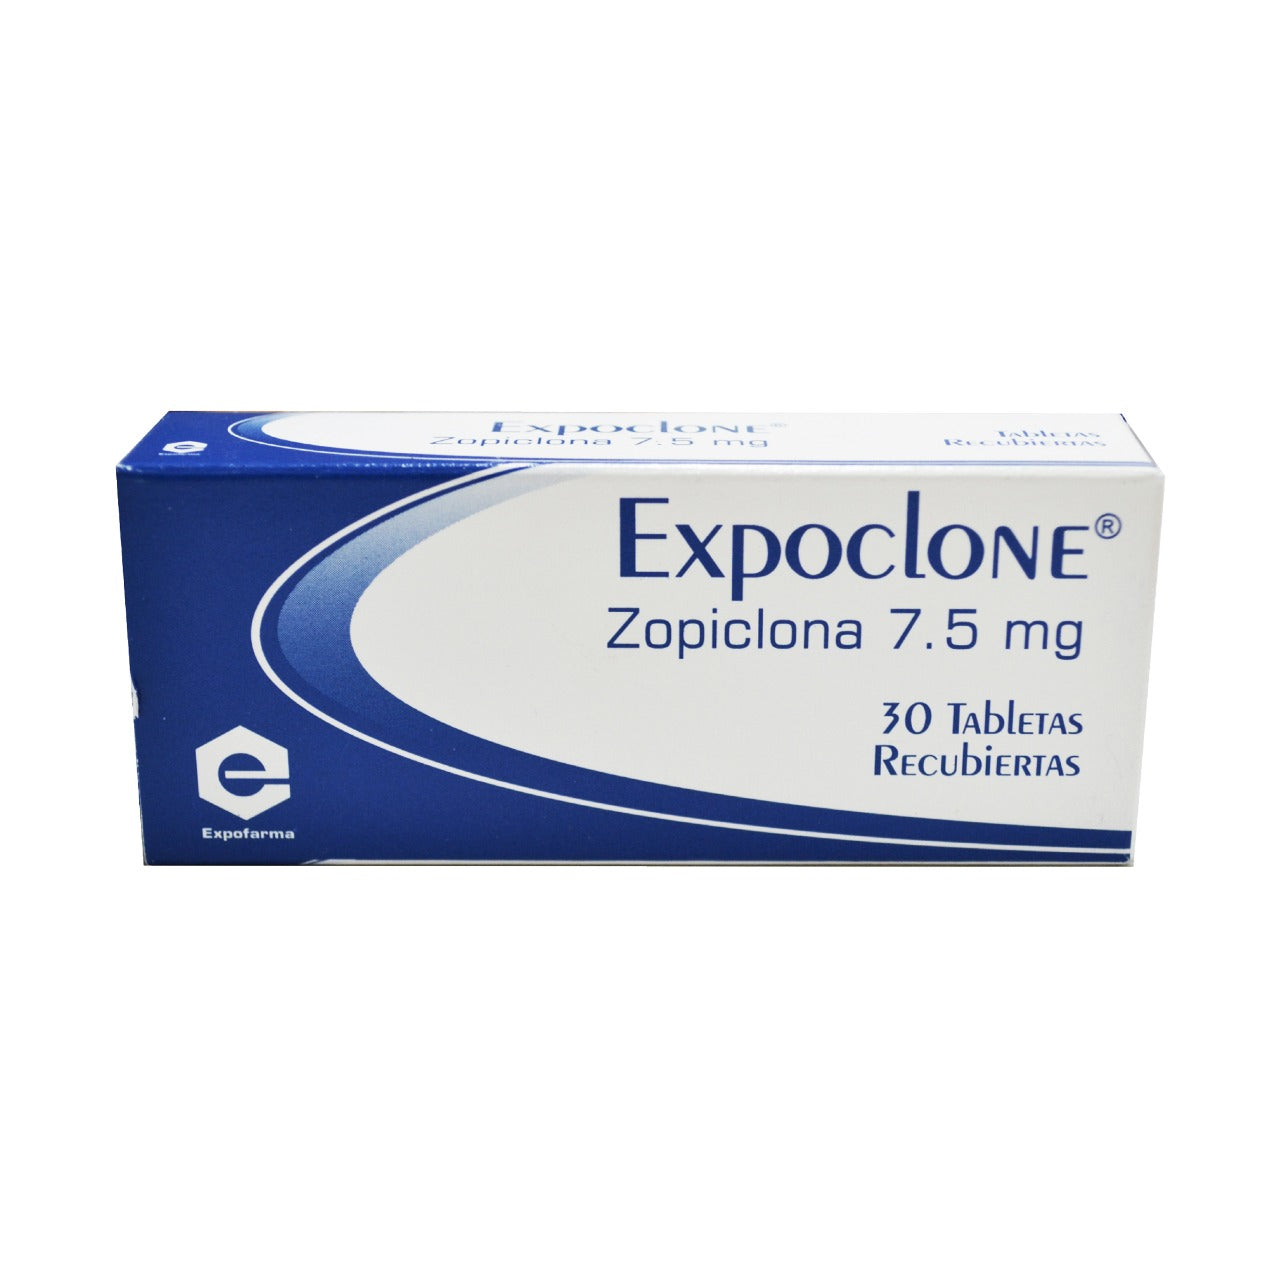 EXPOCLONE (ZOPICLONA) 7.5MG 30 TABLETAS